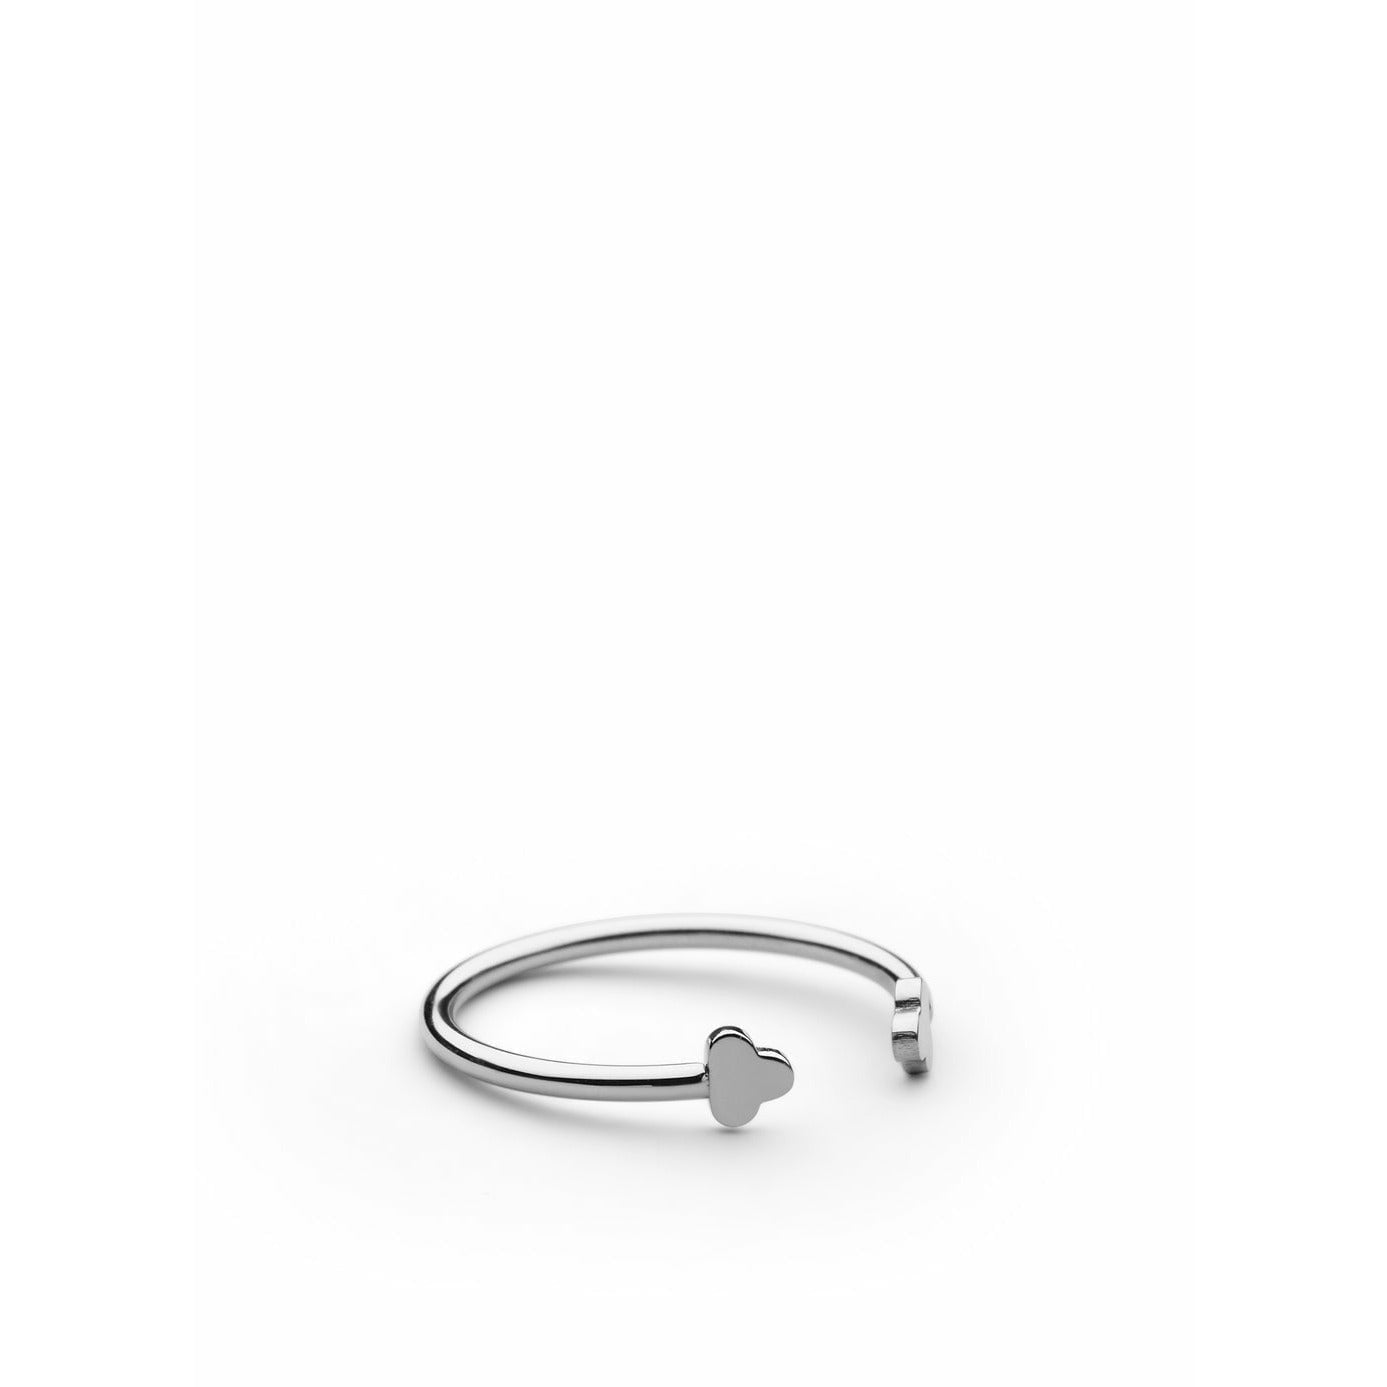 Skultuna Offener Key Ring mittelgroßen Stahl Ø1,73 cm